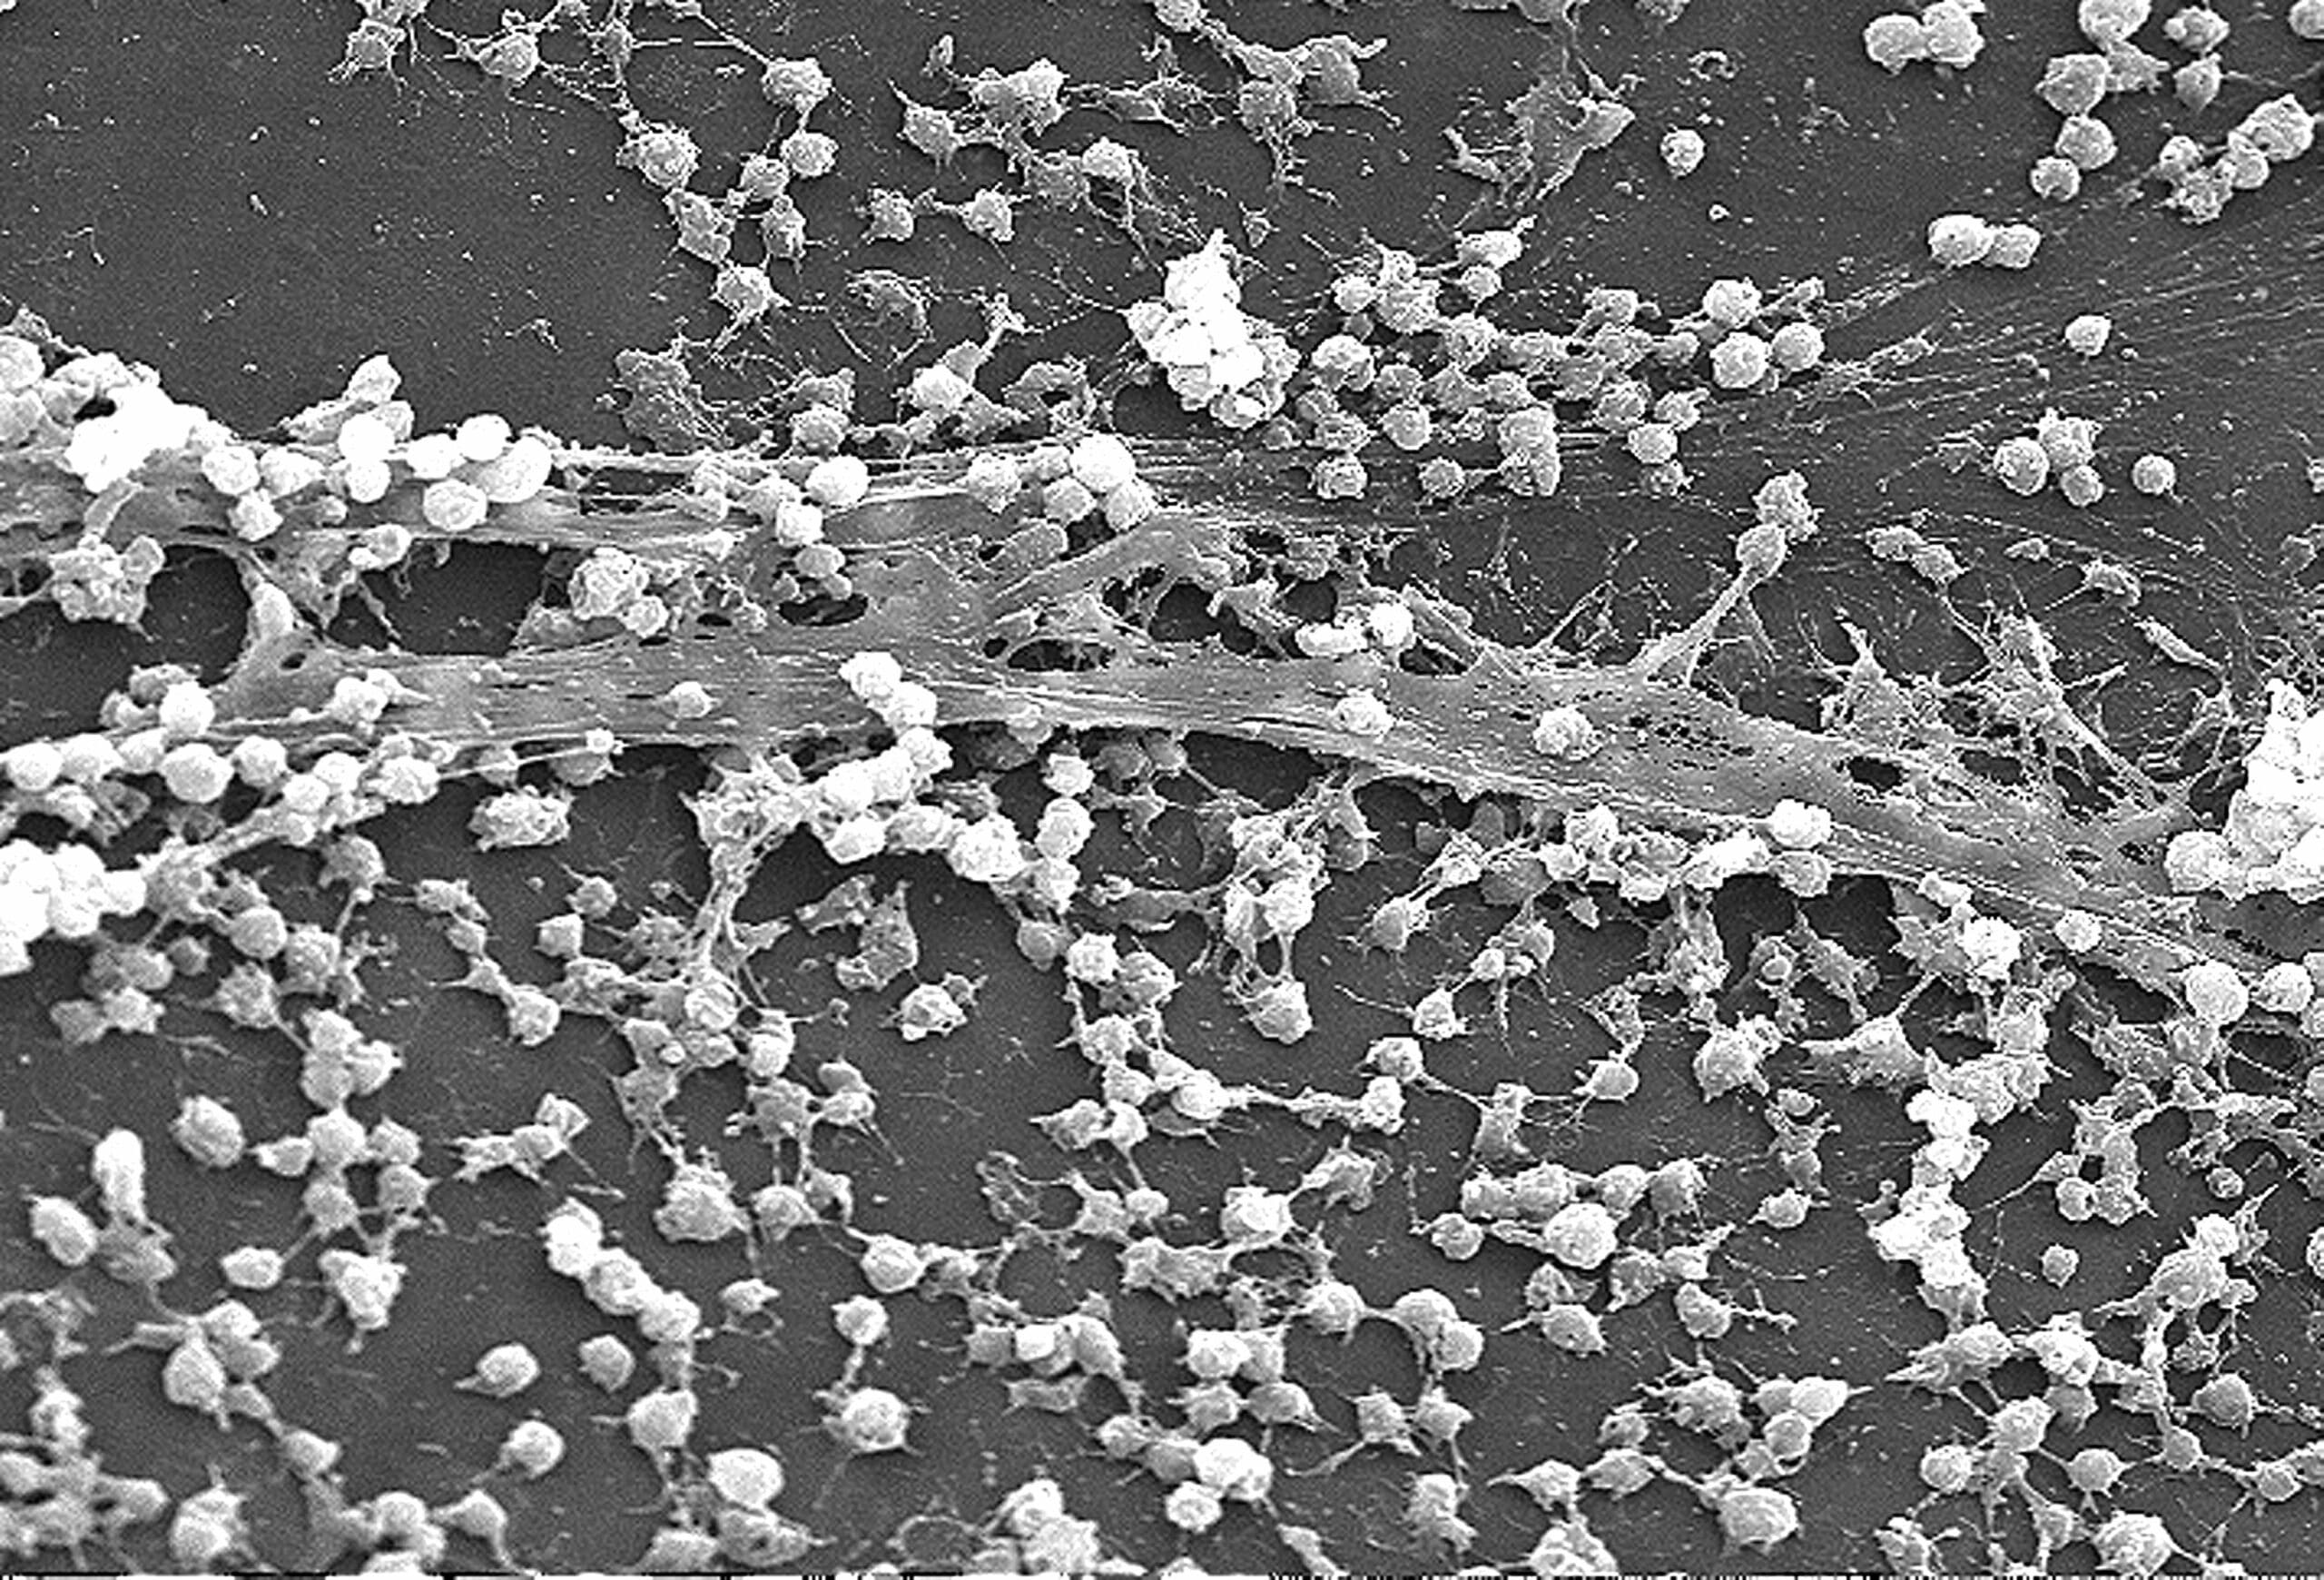 Microscopic image of biofilm on a catheter